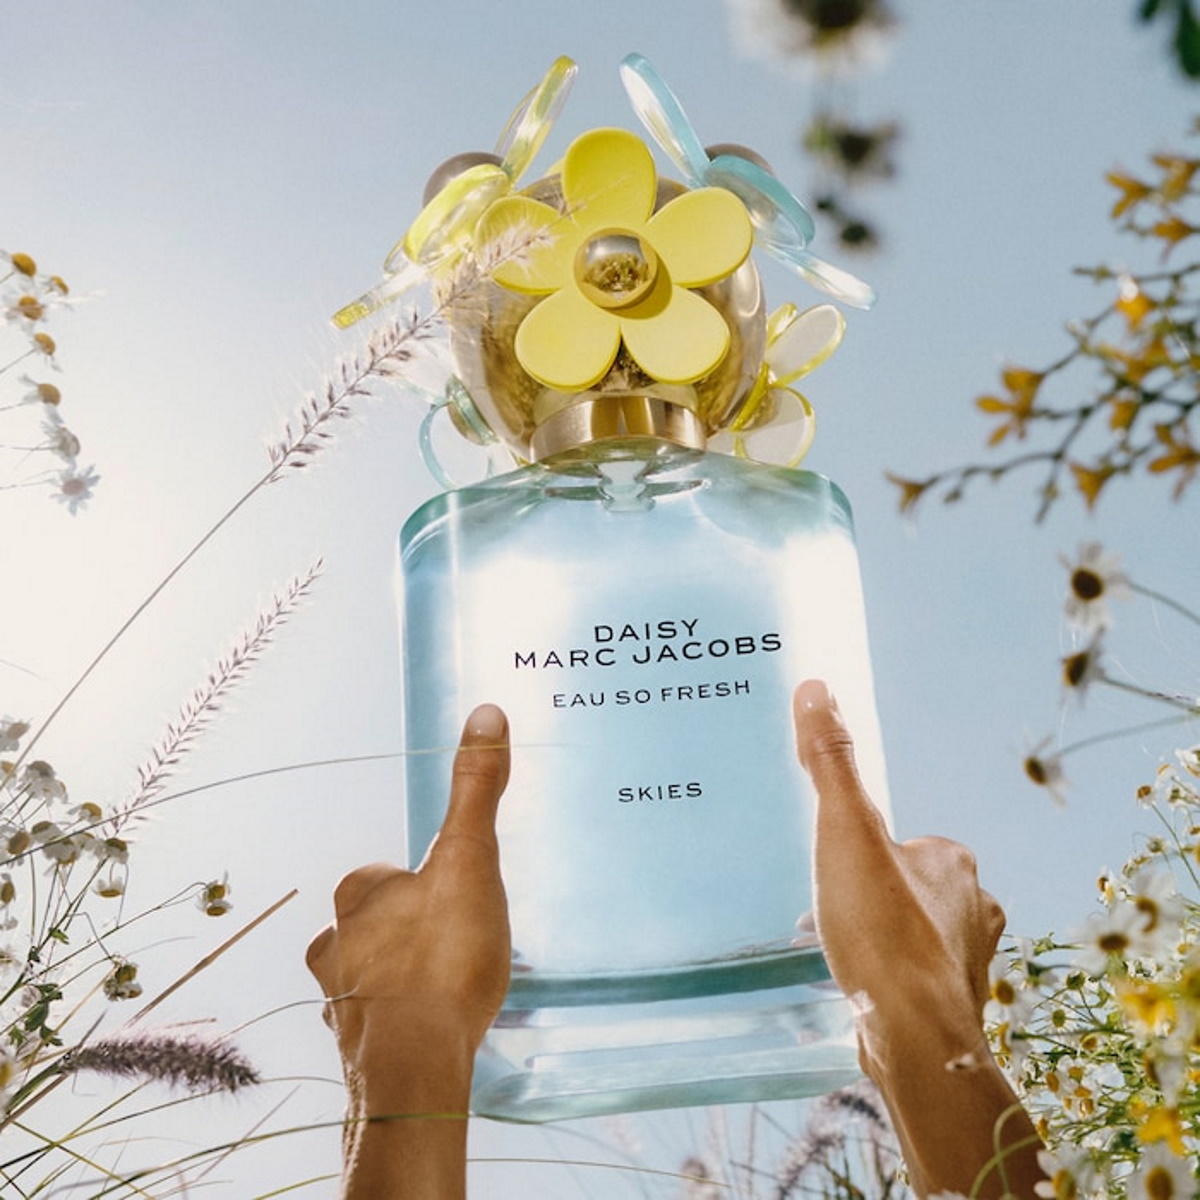 Marc Jacobs - Daisy Eau So Fresh Skies parfum 2022